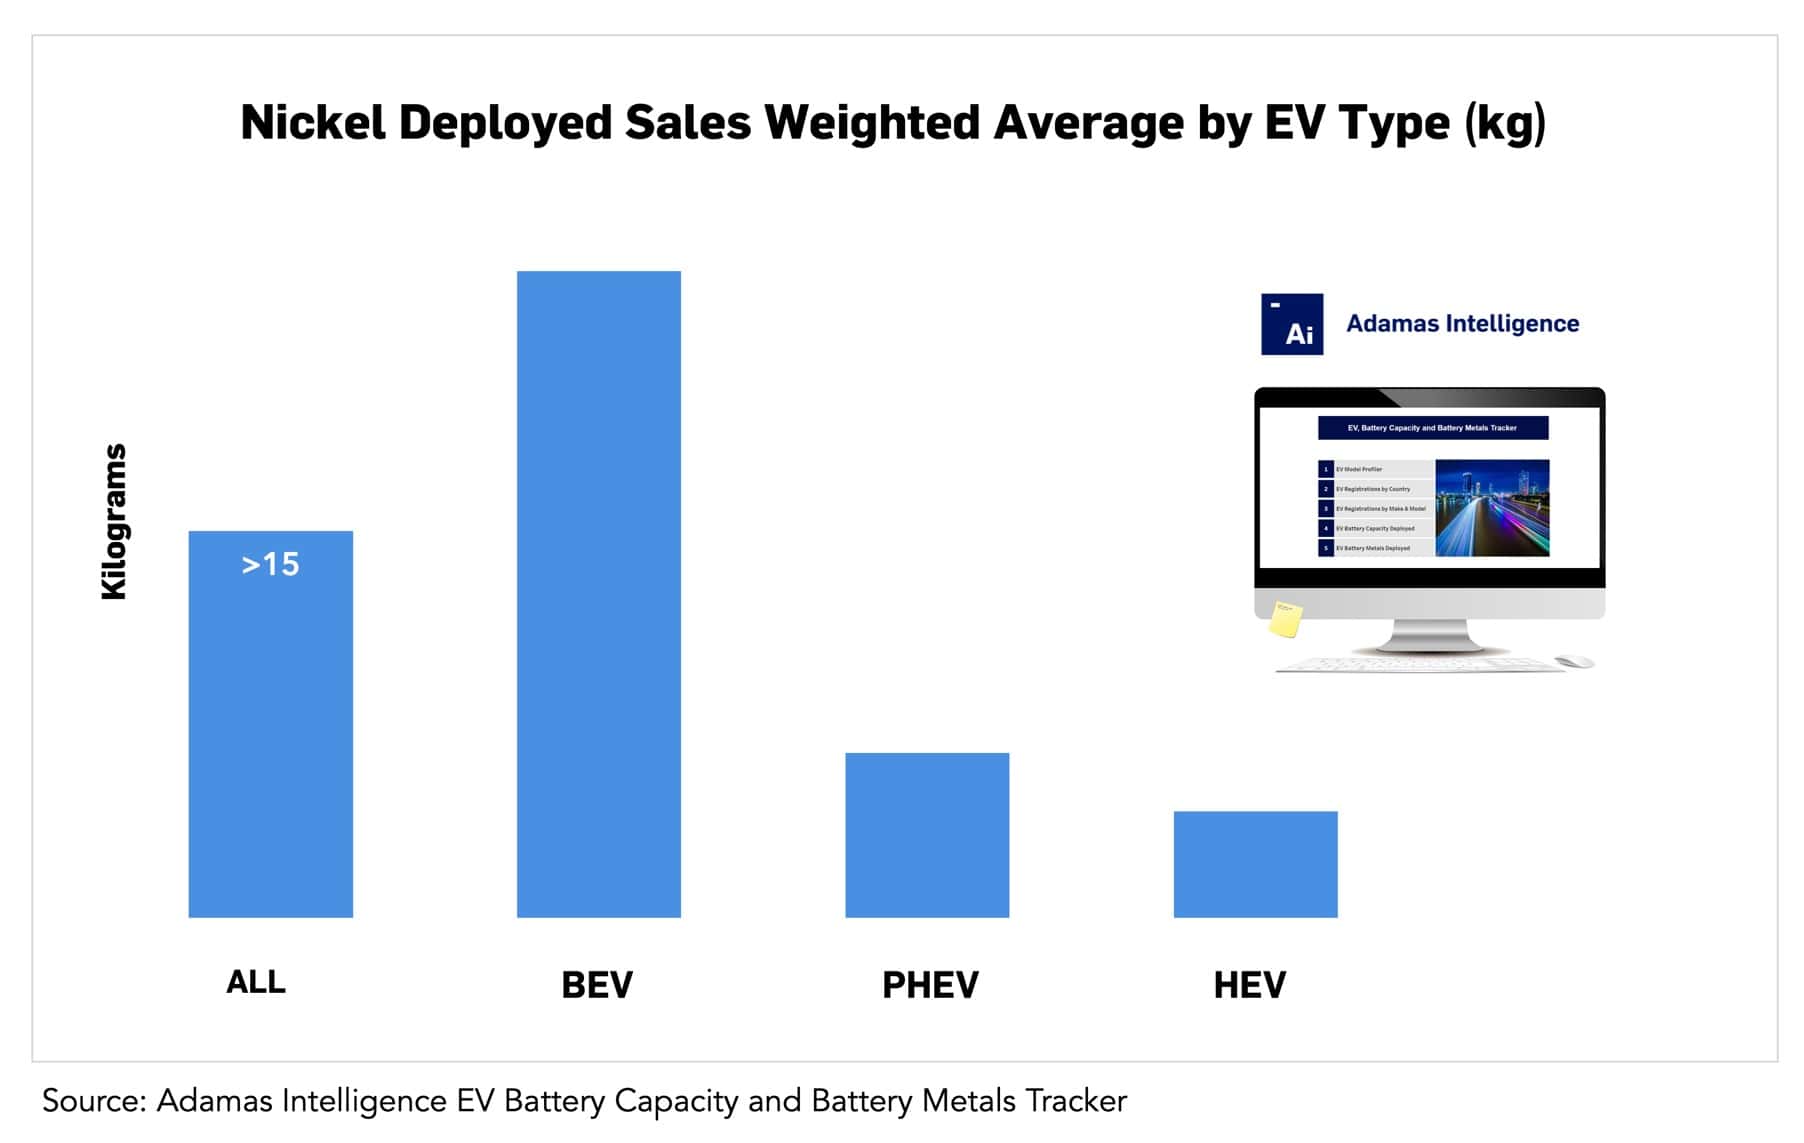 Average nickel deployed is increasing for all EV types